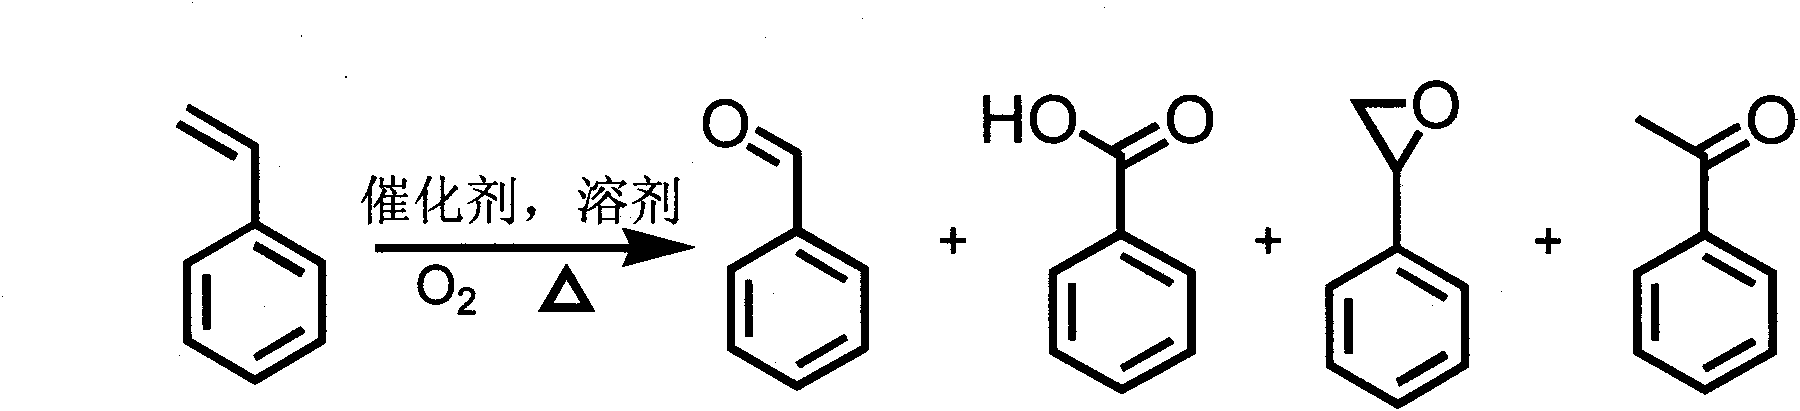 Method for preparing benzaldehyde through catalytic oxidation of styrene